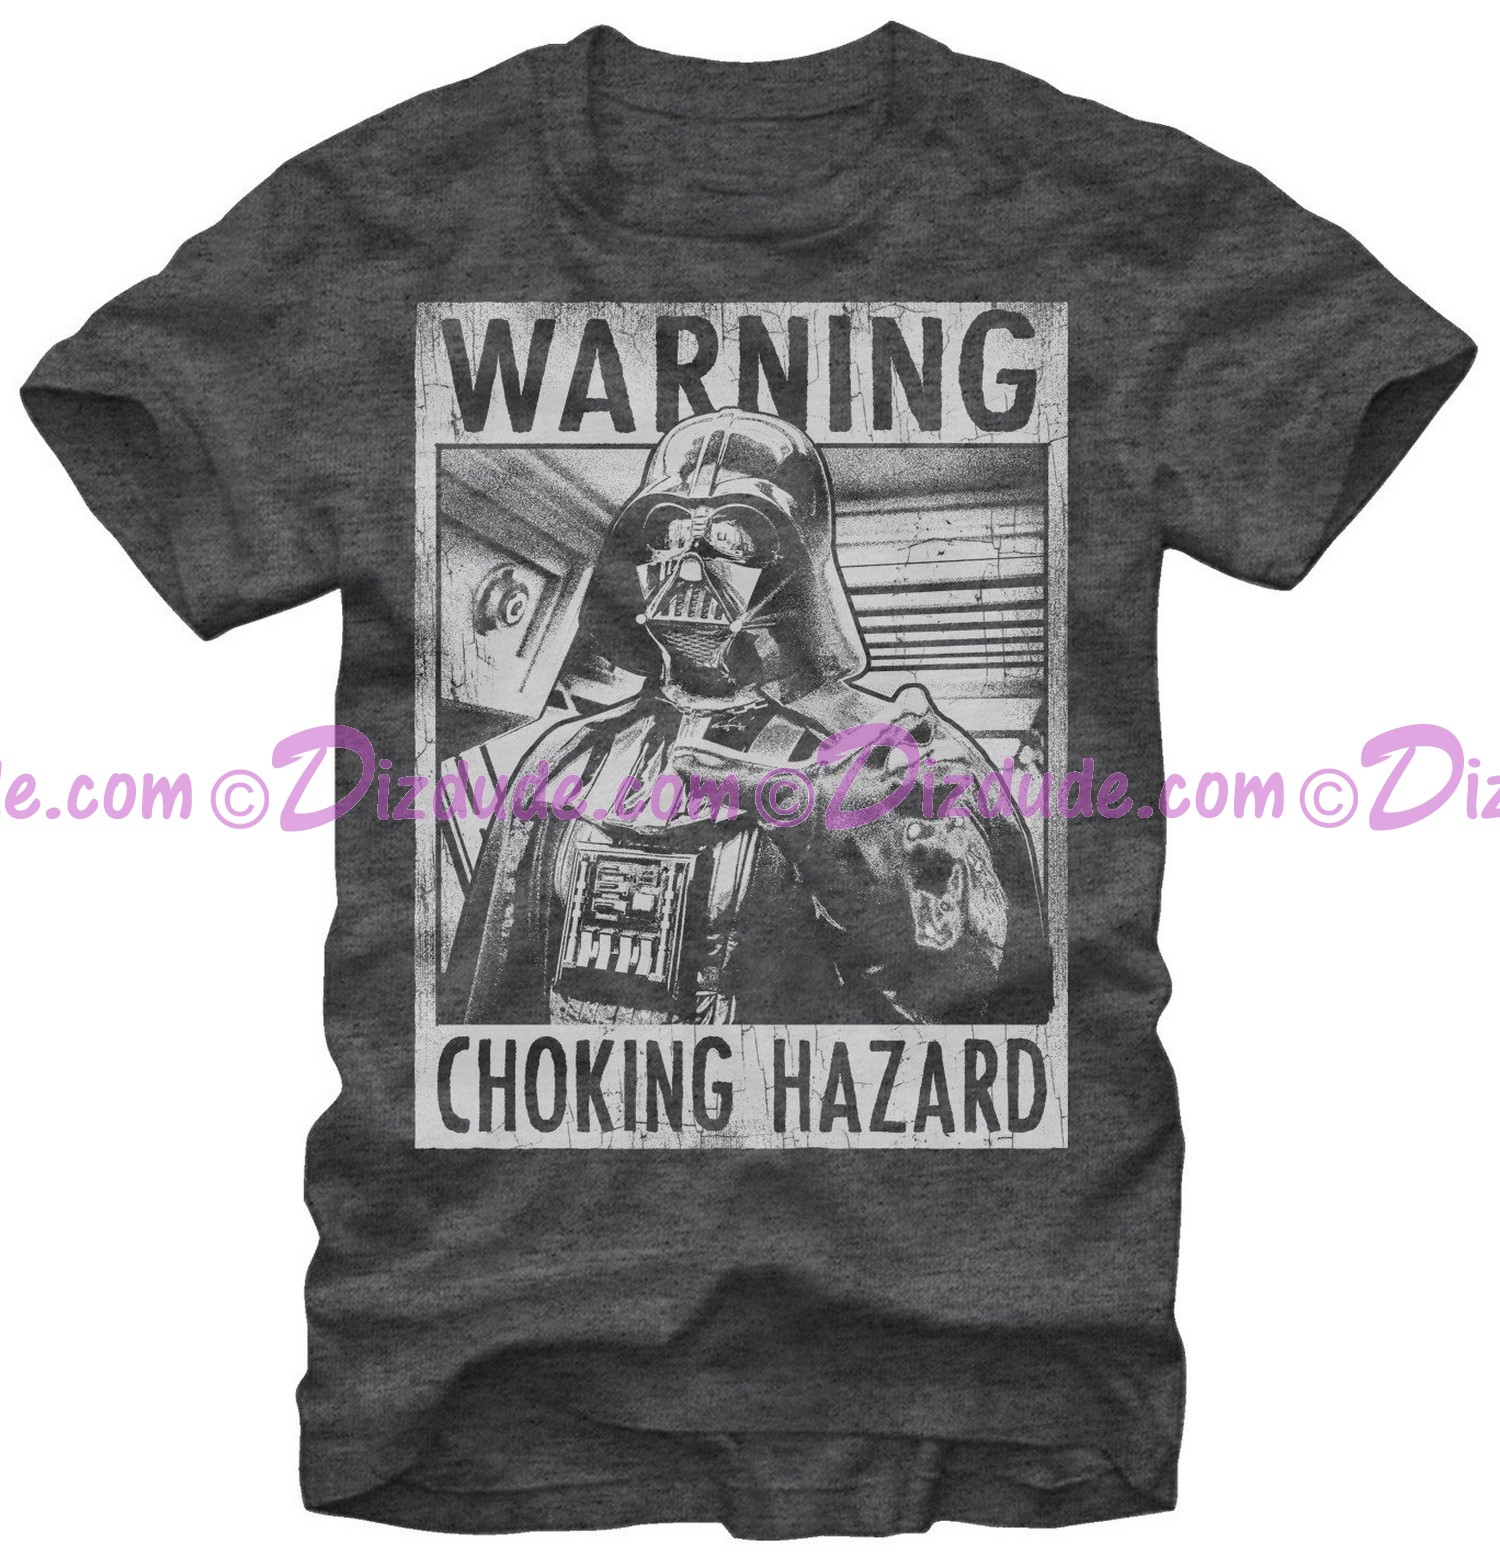 Star Wars Darth Vader - Warning Choking Hazard Adult T-Shirt (Tshirt, T shirt or Tee) © Dizdude.com